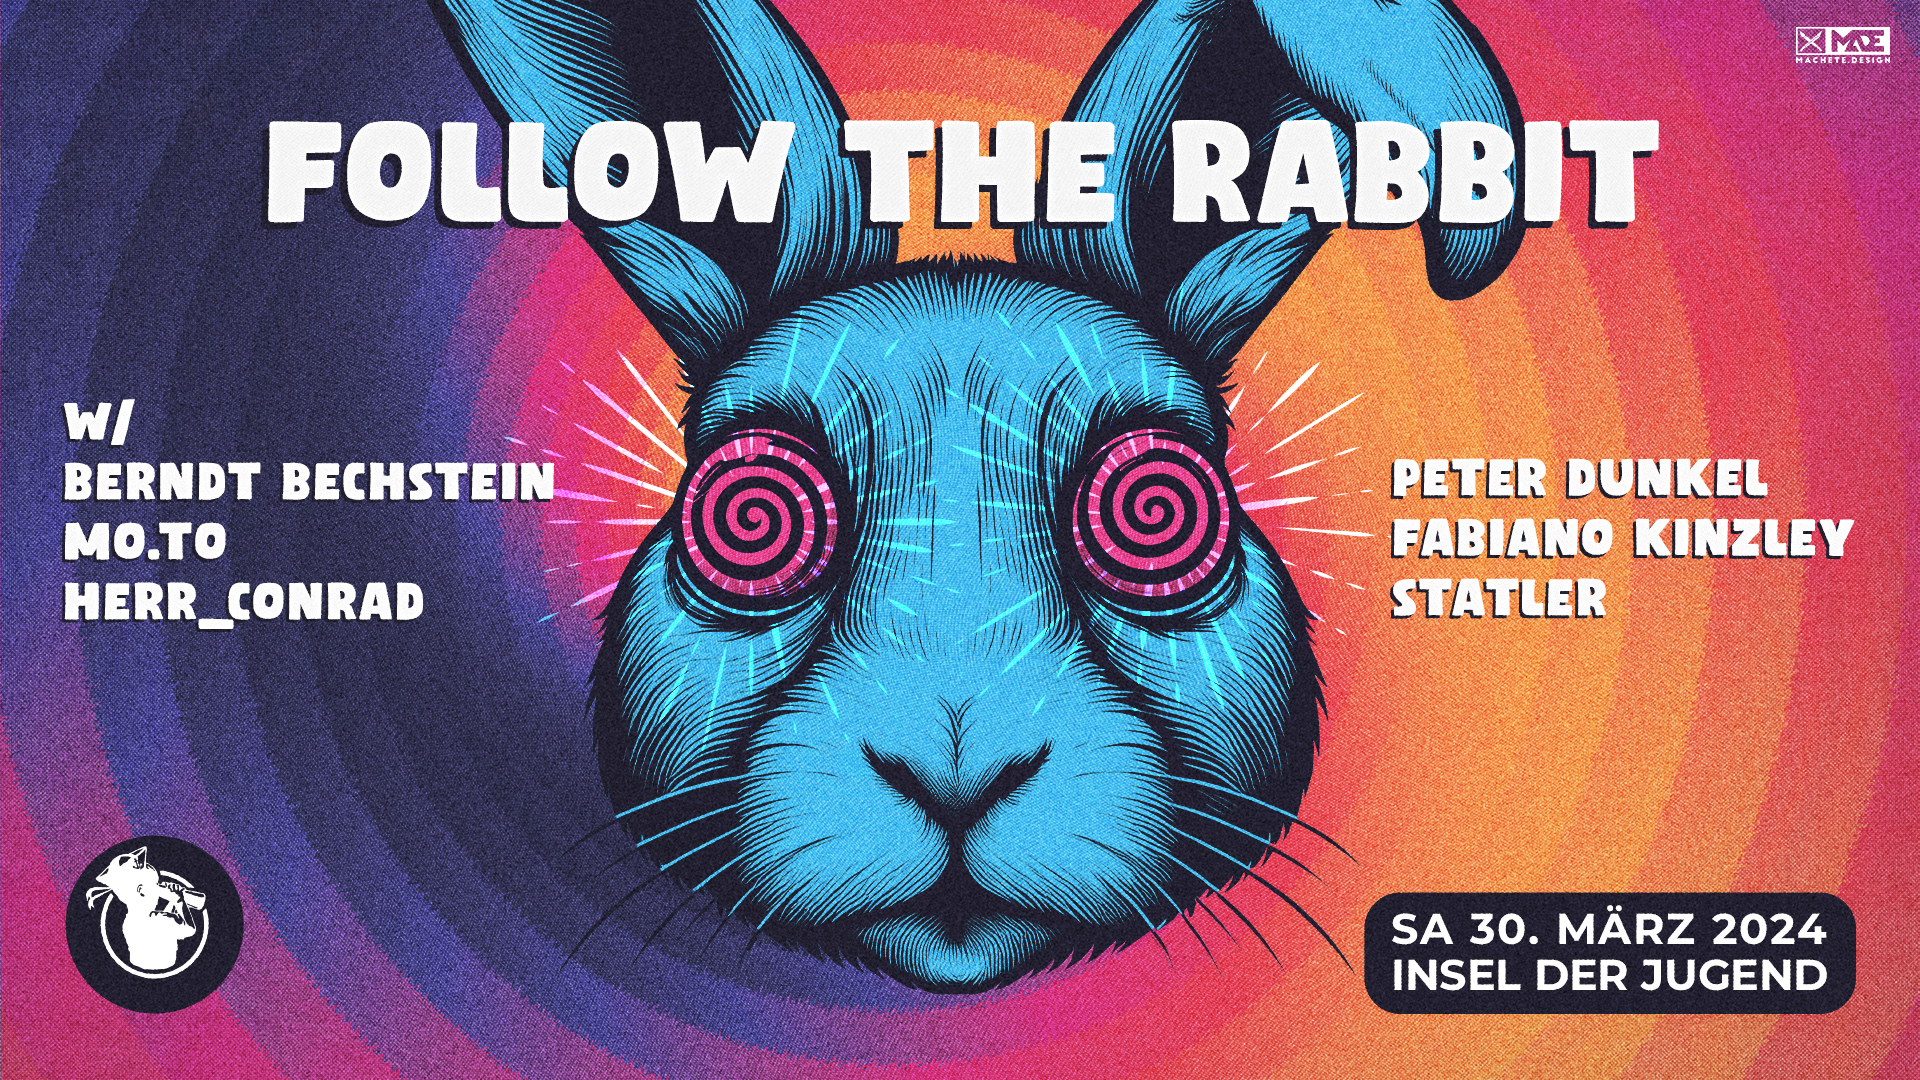 Follow the rabbit